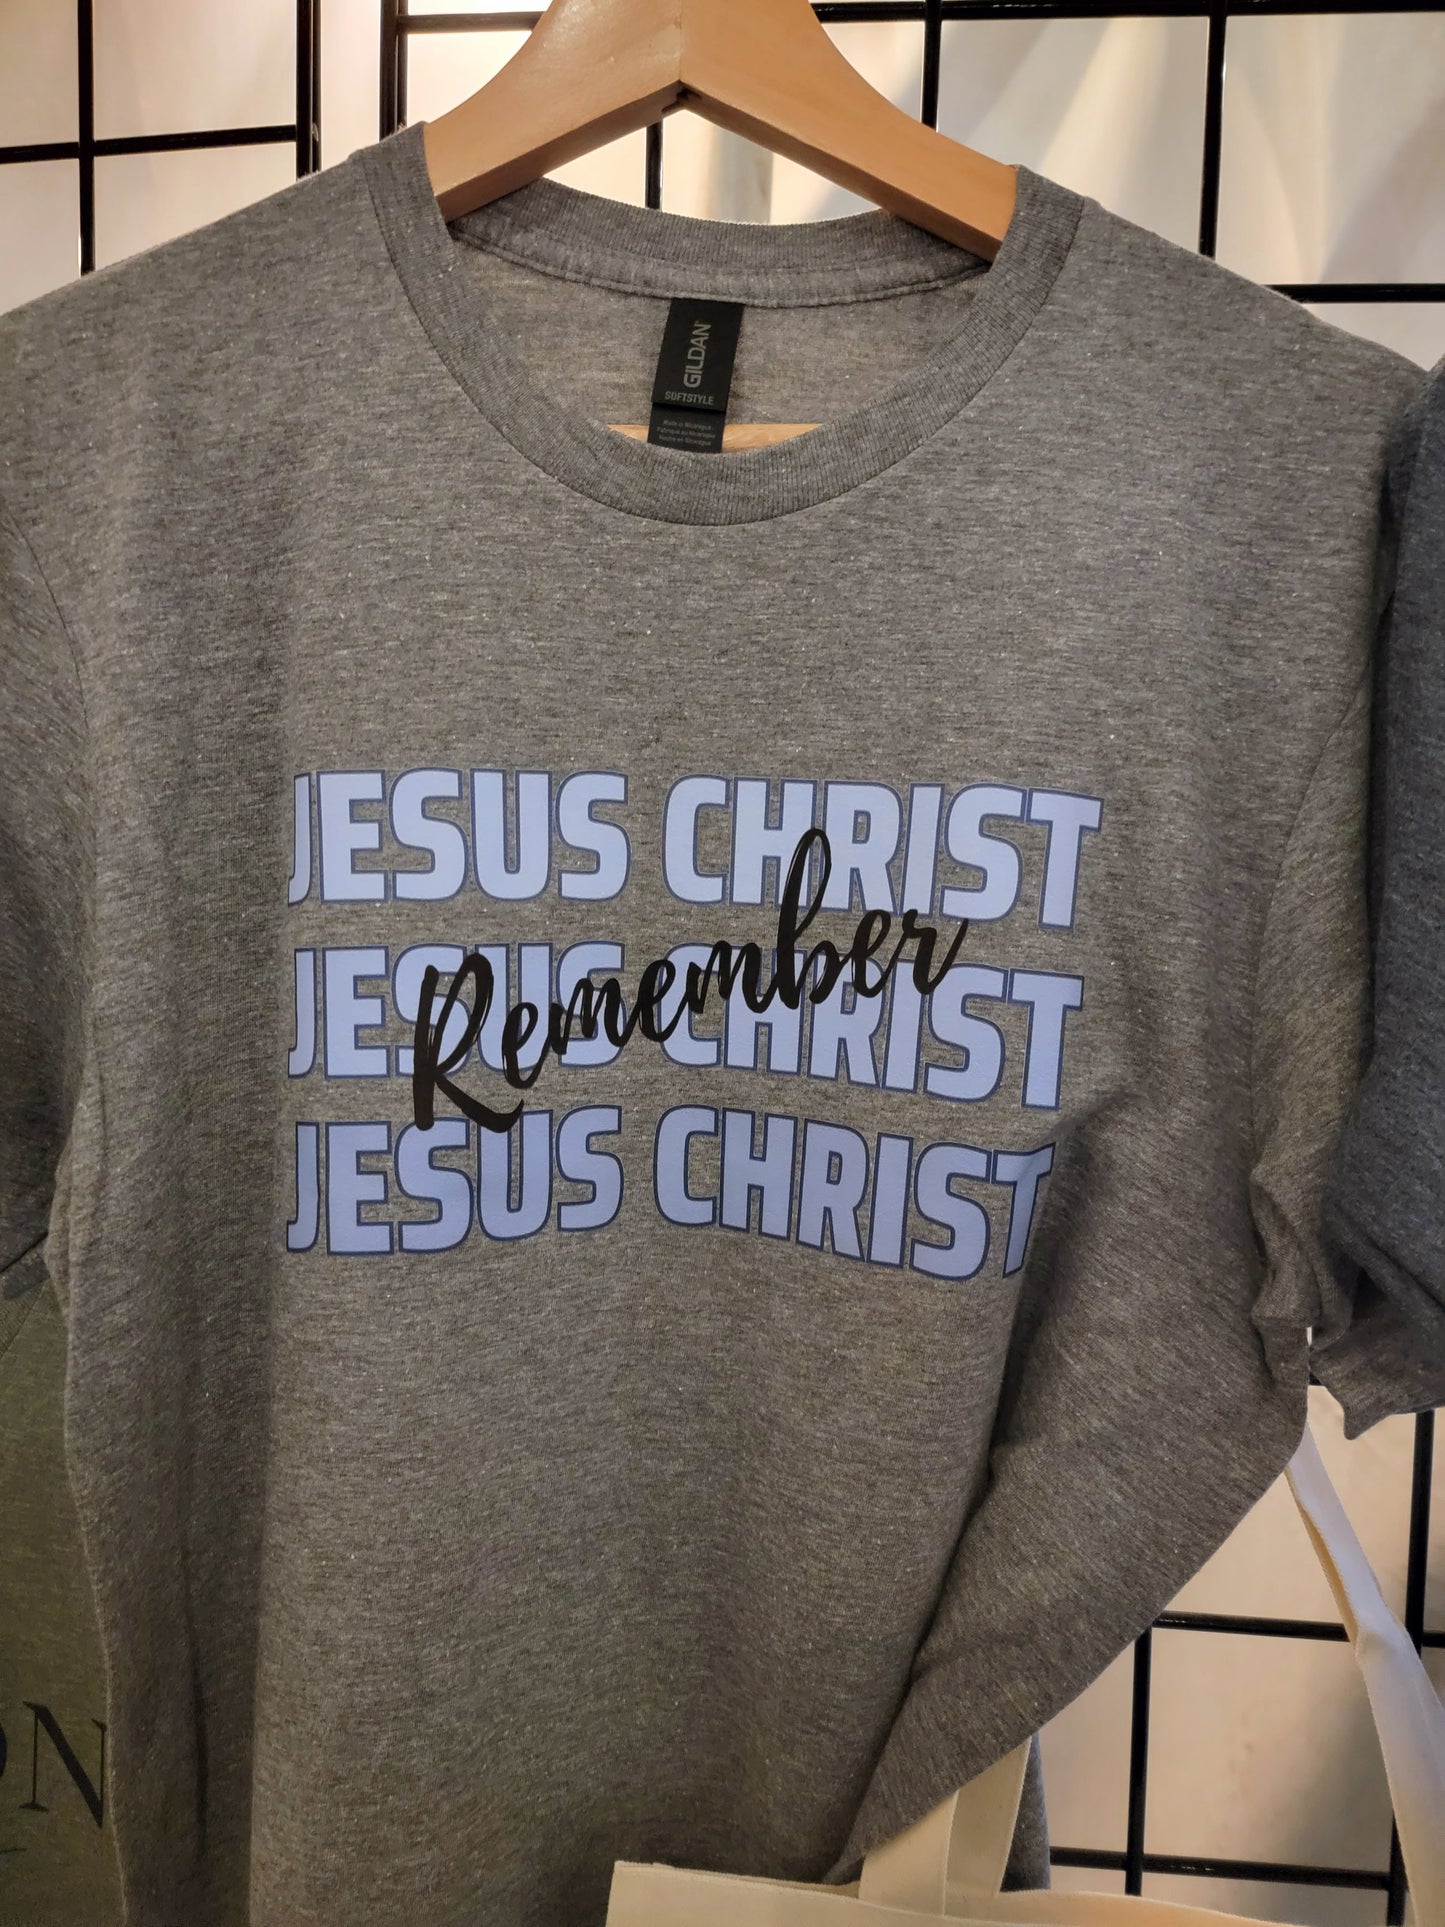 Remember Jesus Christ Shirt